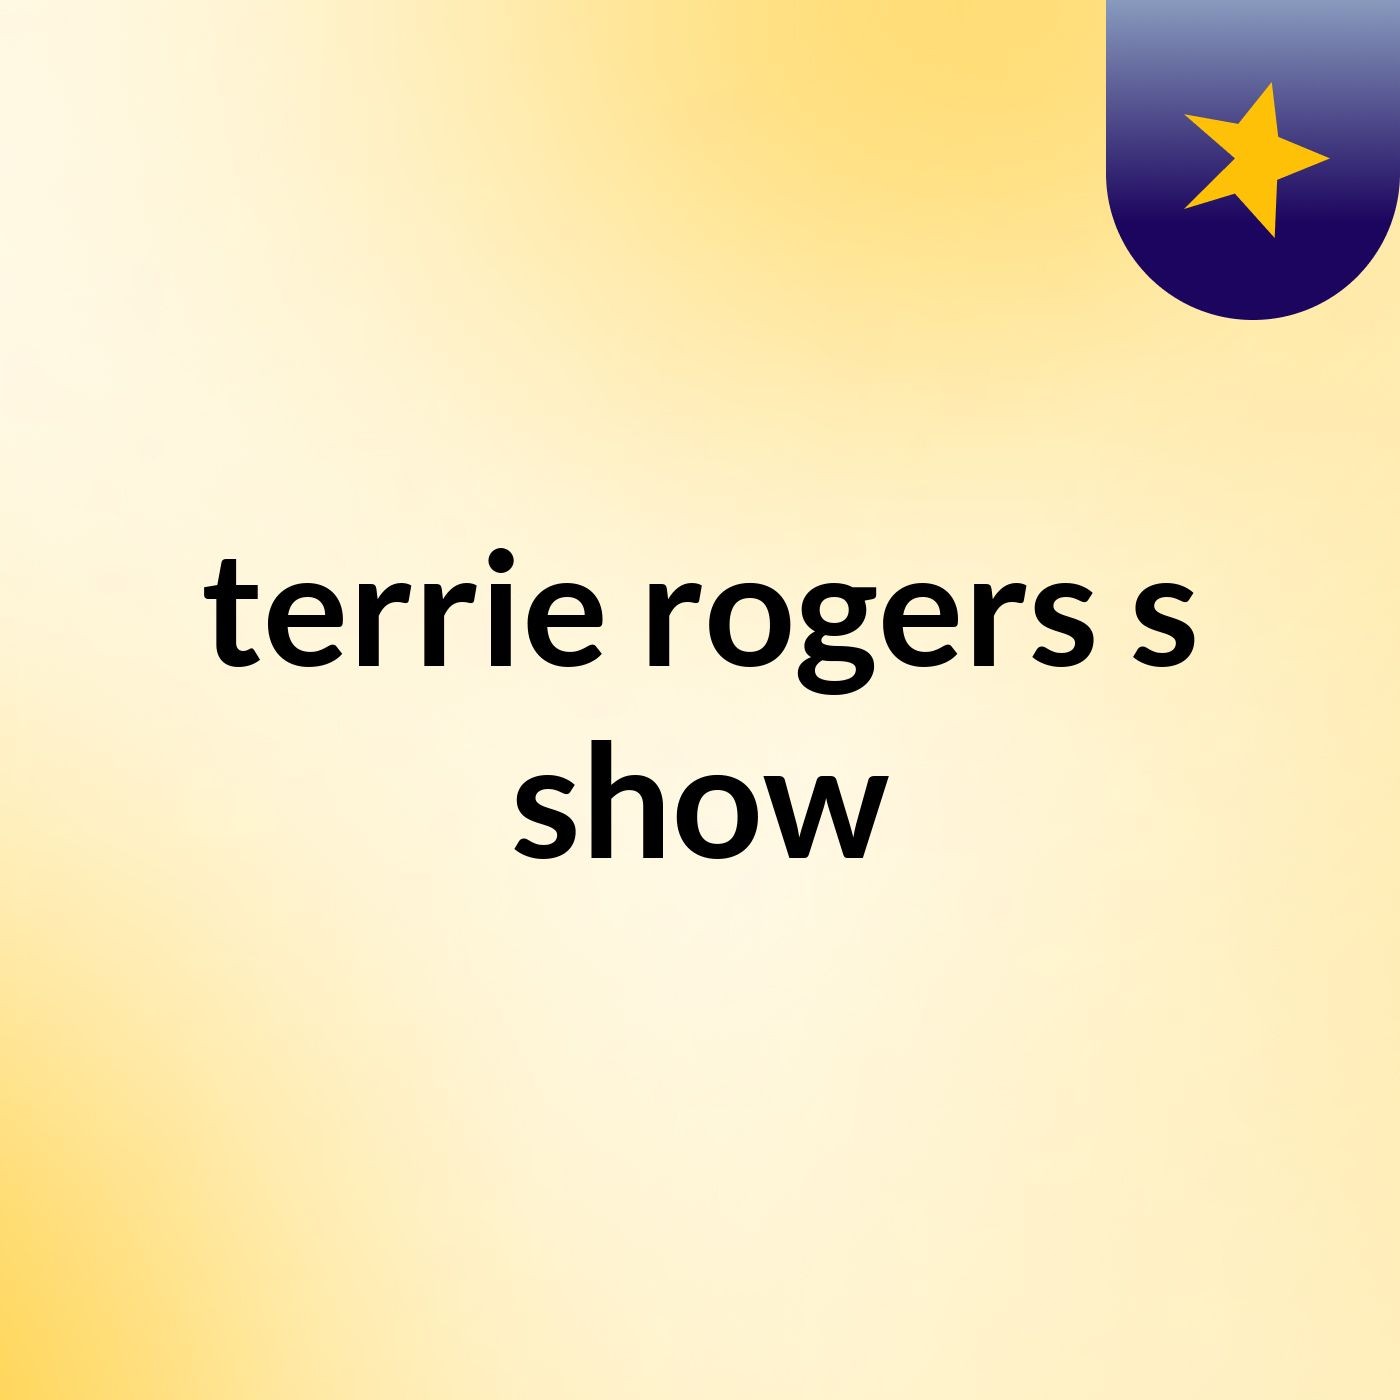 terrie rogers's show